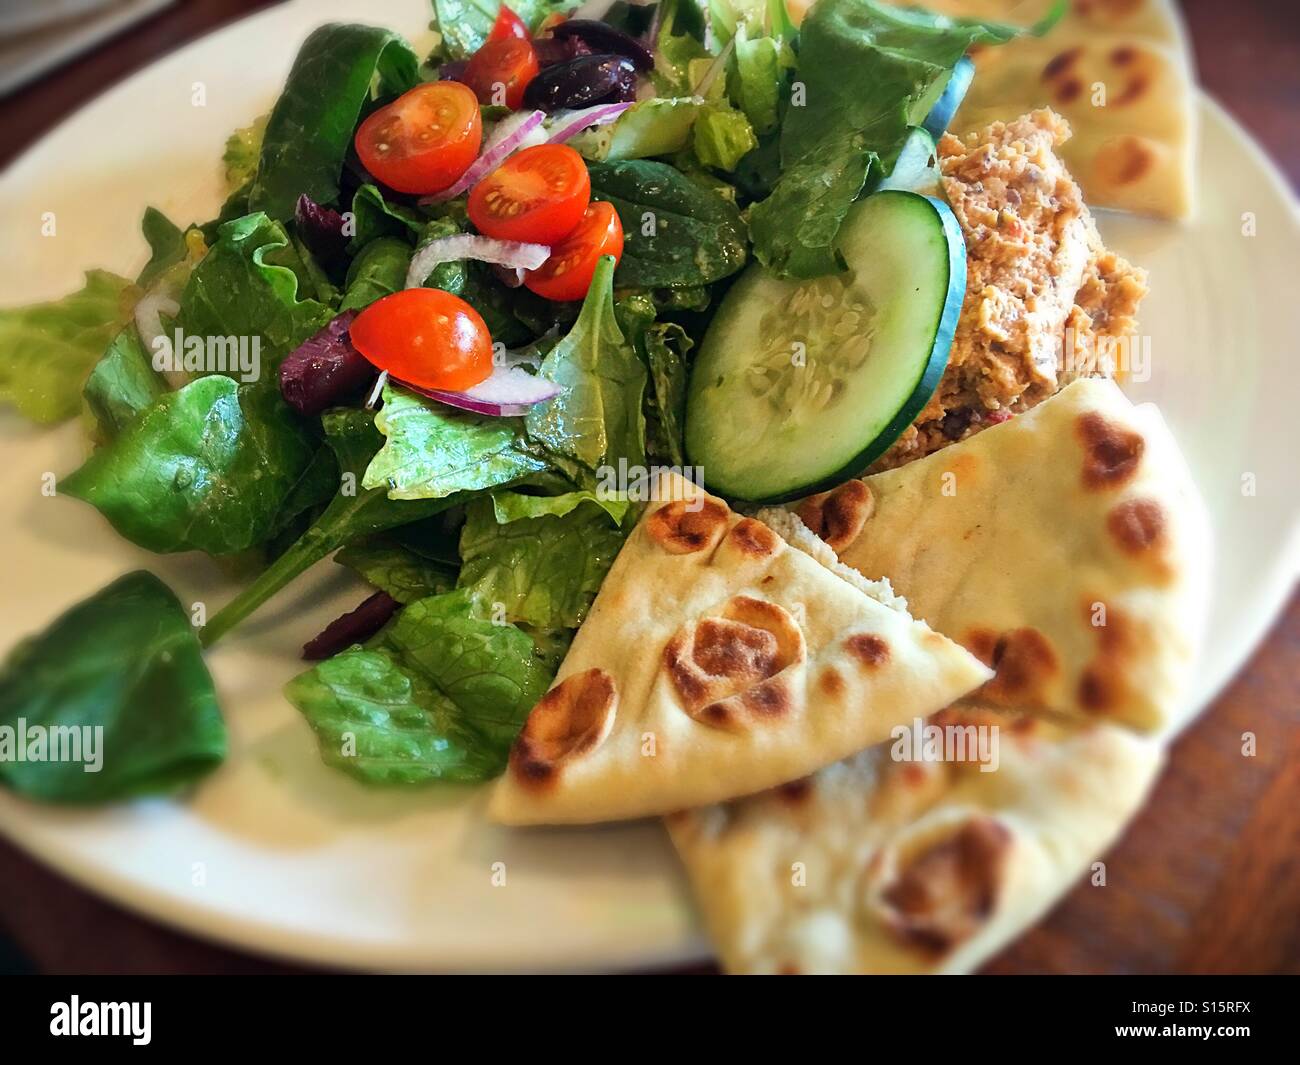 Plant based meal of salad, hummus and pita. Stock Photo